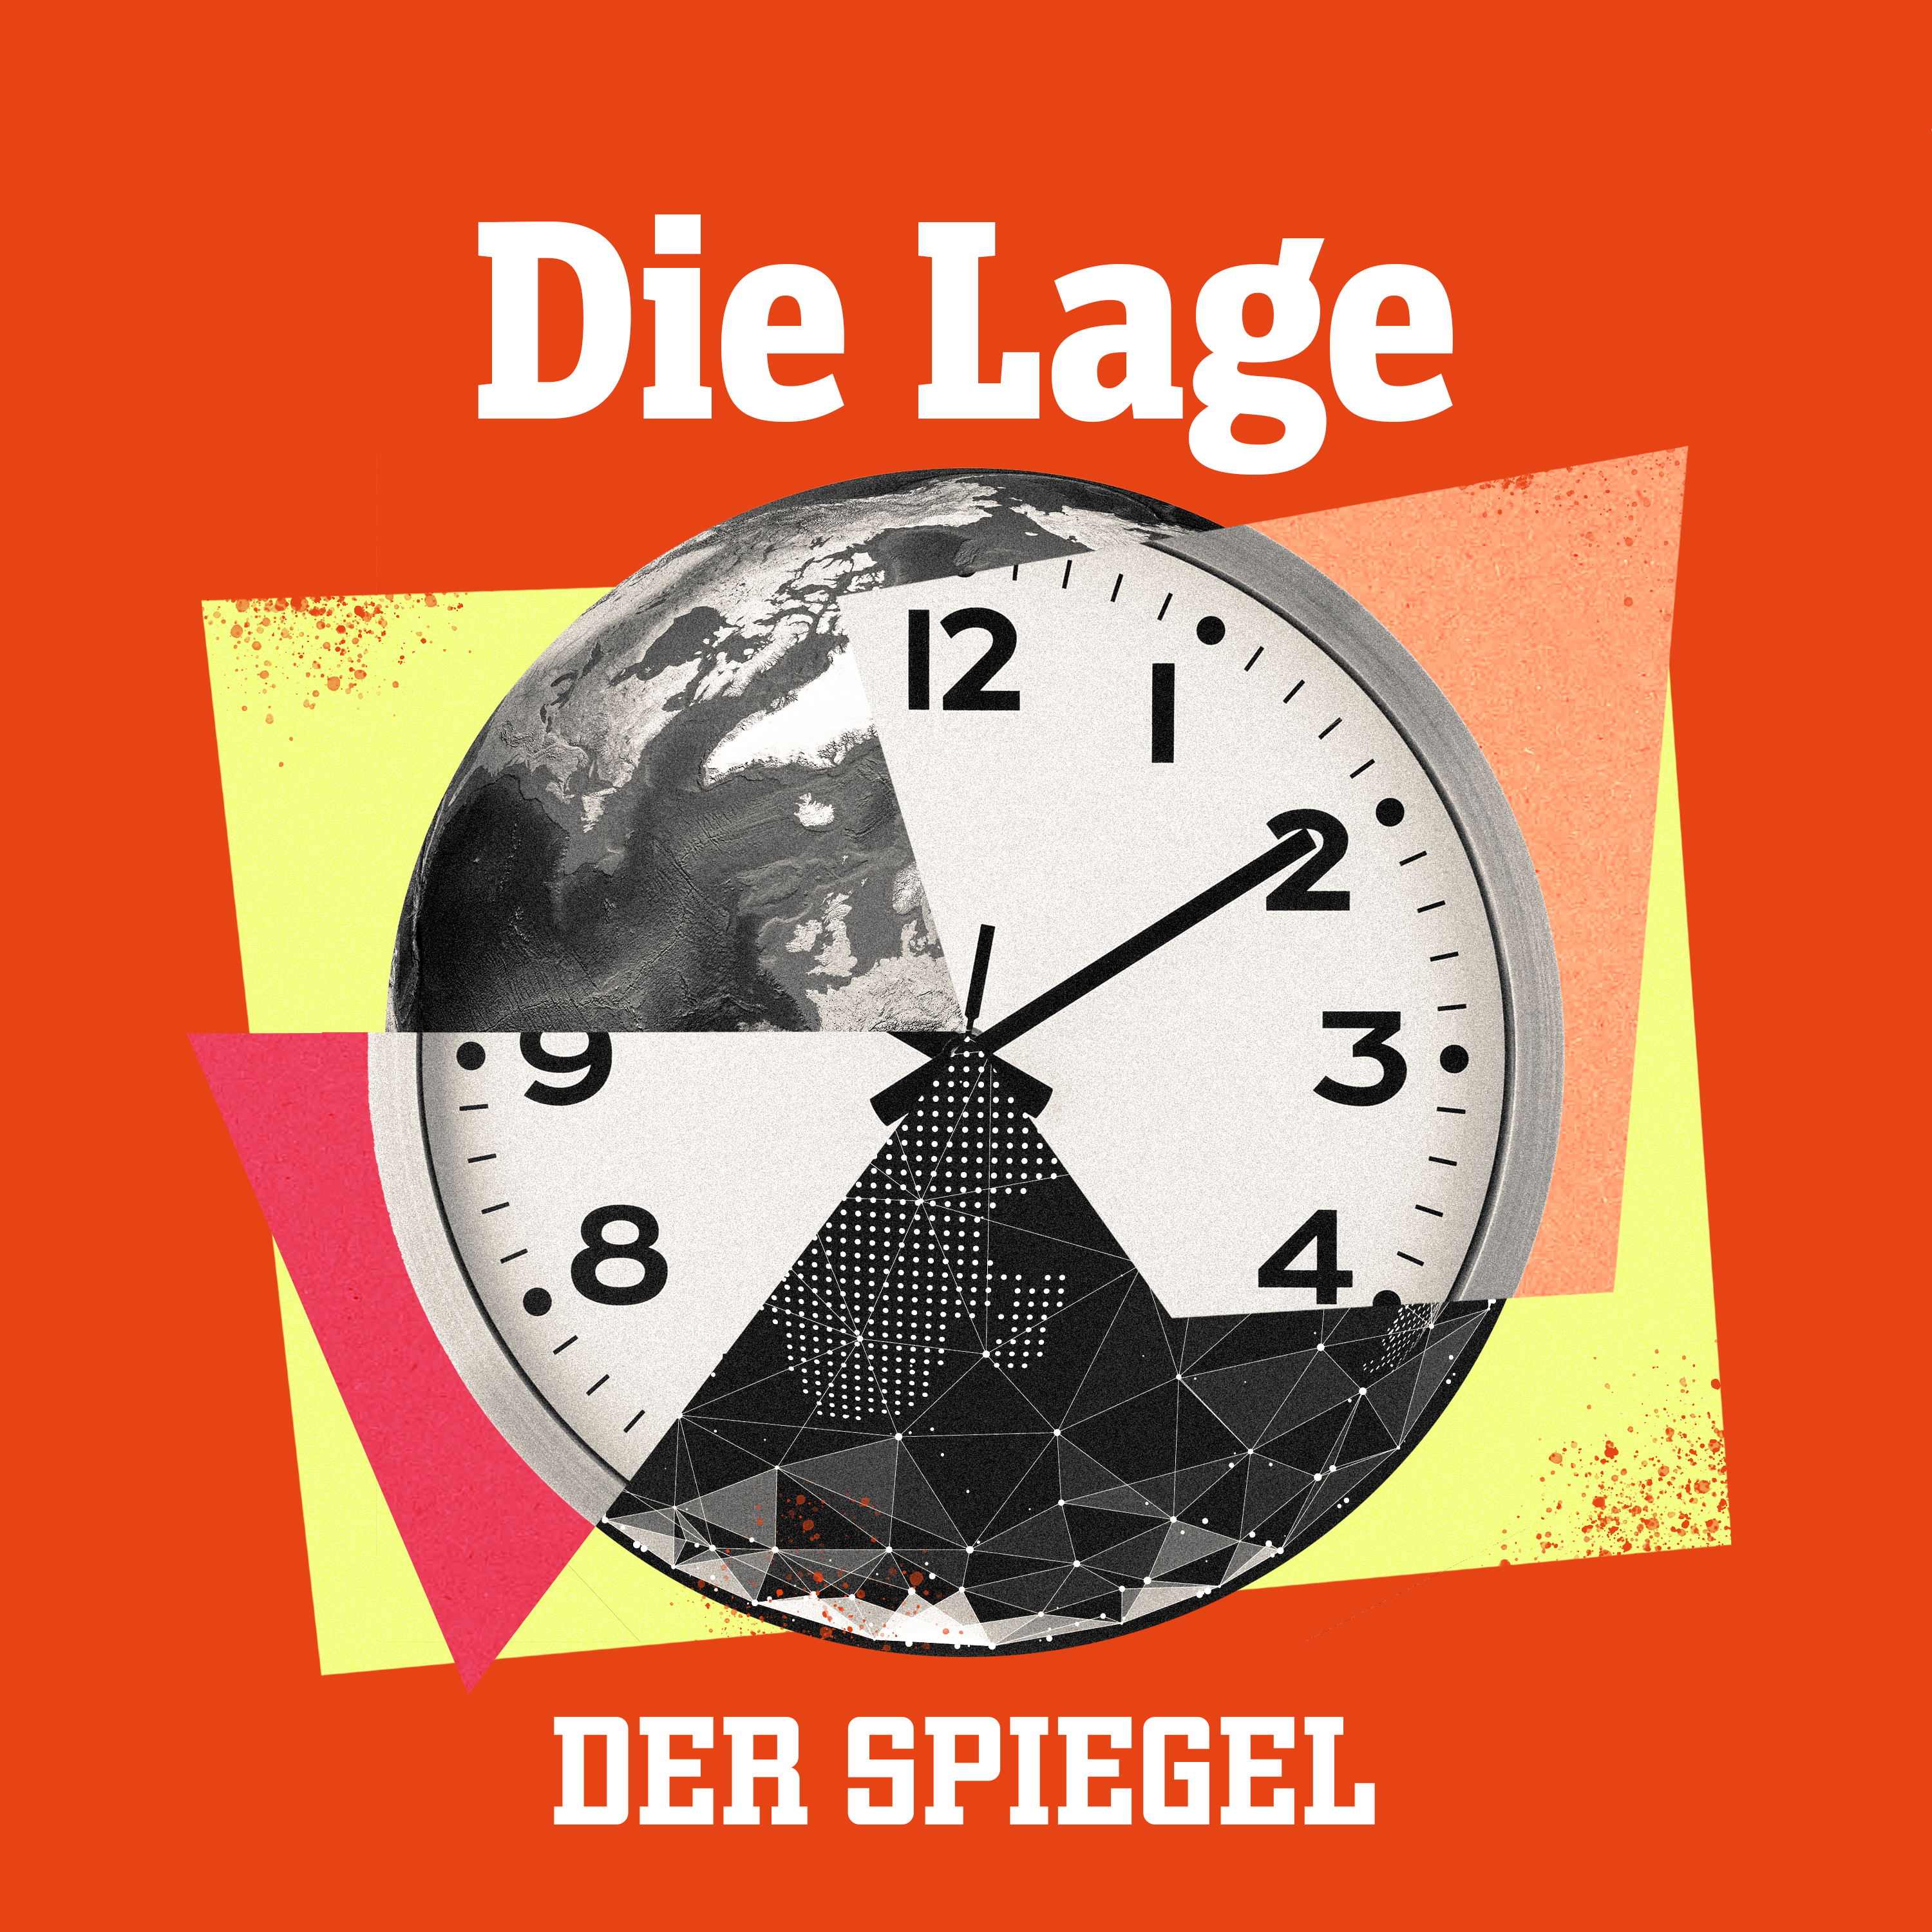 24.09. am Morgen: Laschets Wahlkampfbilanz, Super-G, Steinmeiers Zukunft